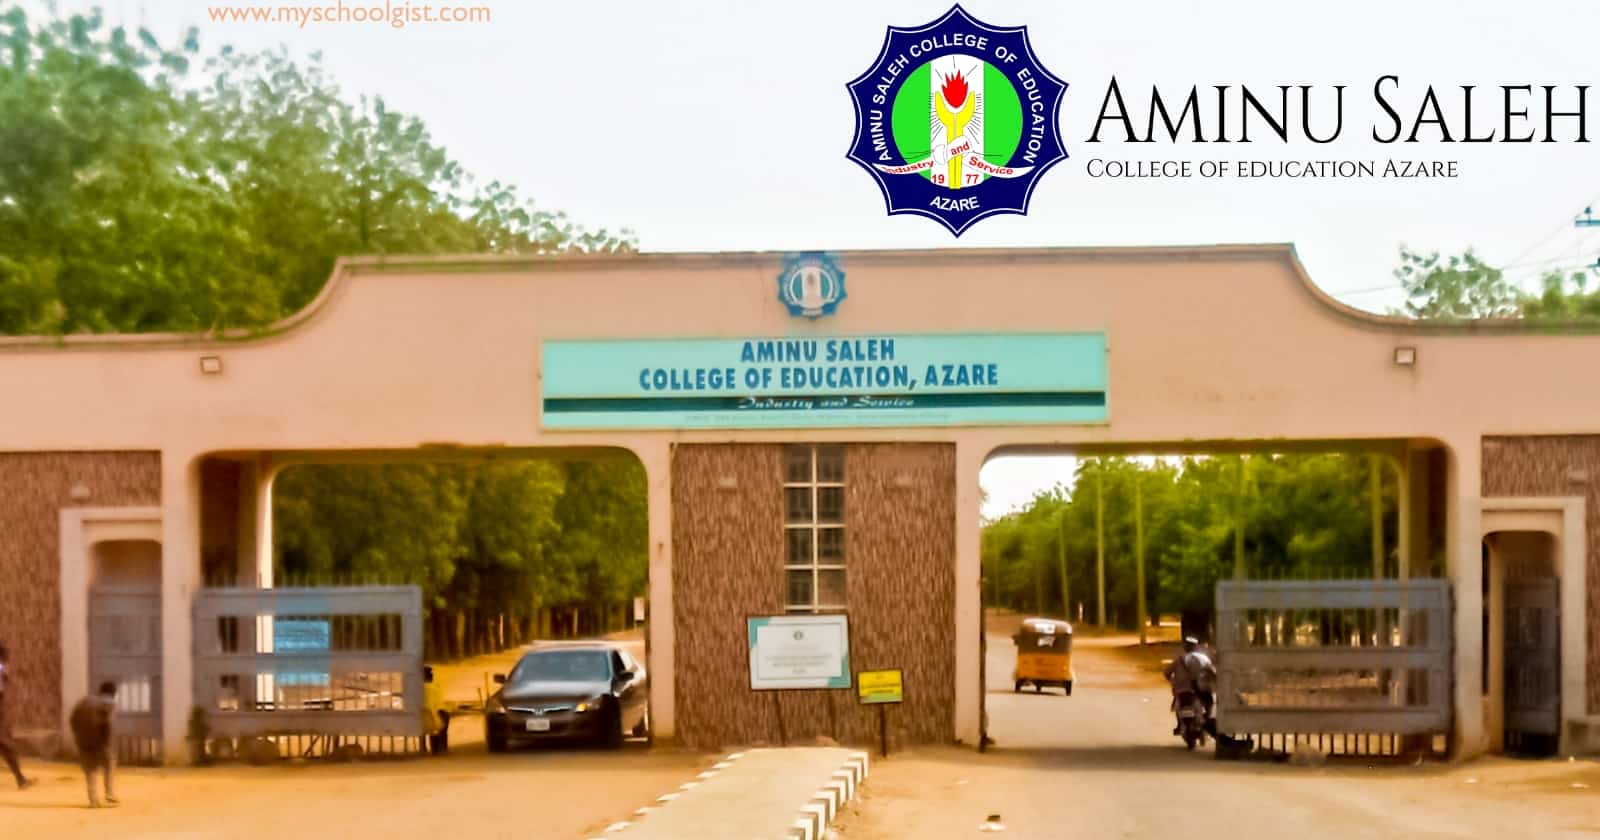 Aminu Saleh College of Education Azare (ASCOEA) Summer Semester